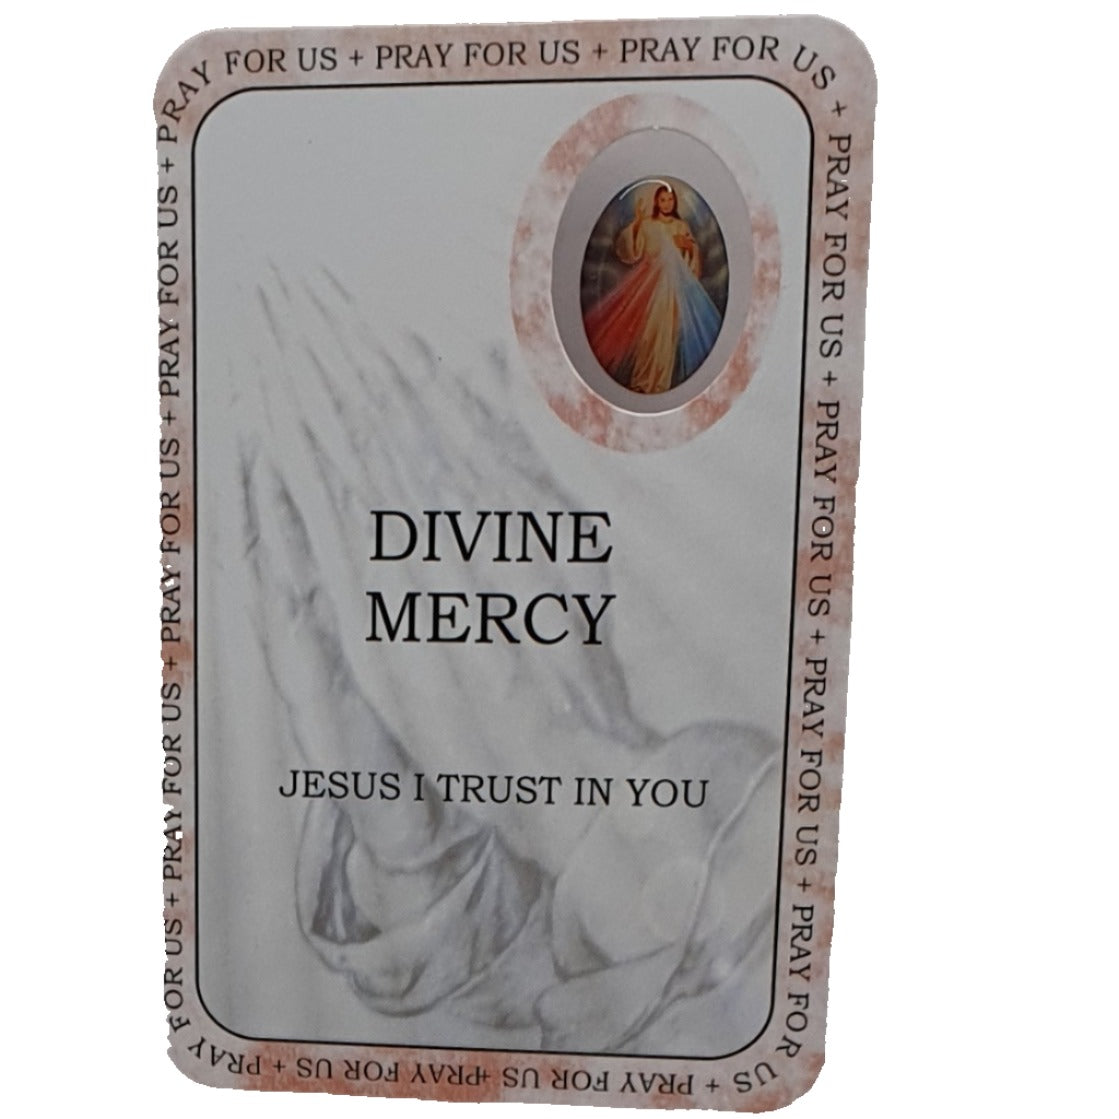 Divine Mercy Prayer Card - Jesus I Trust In You